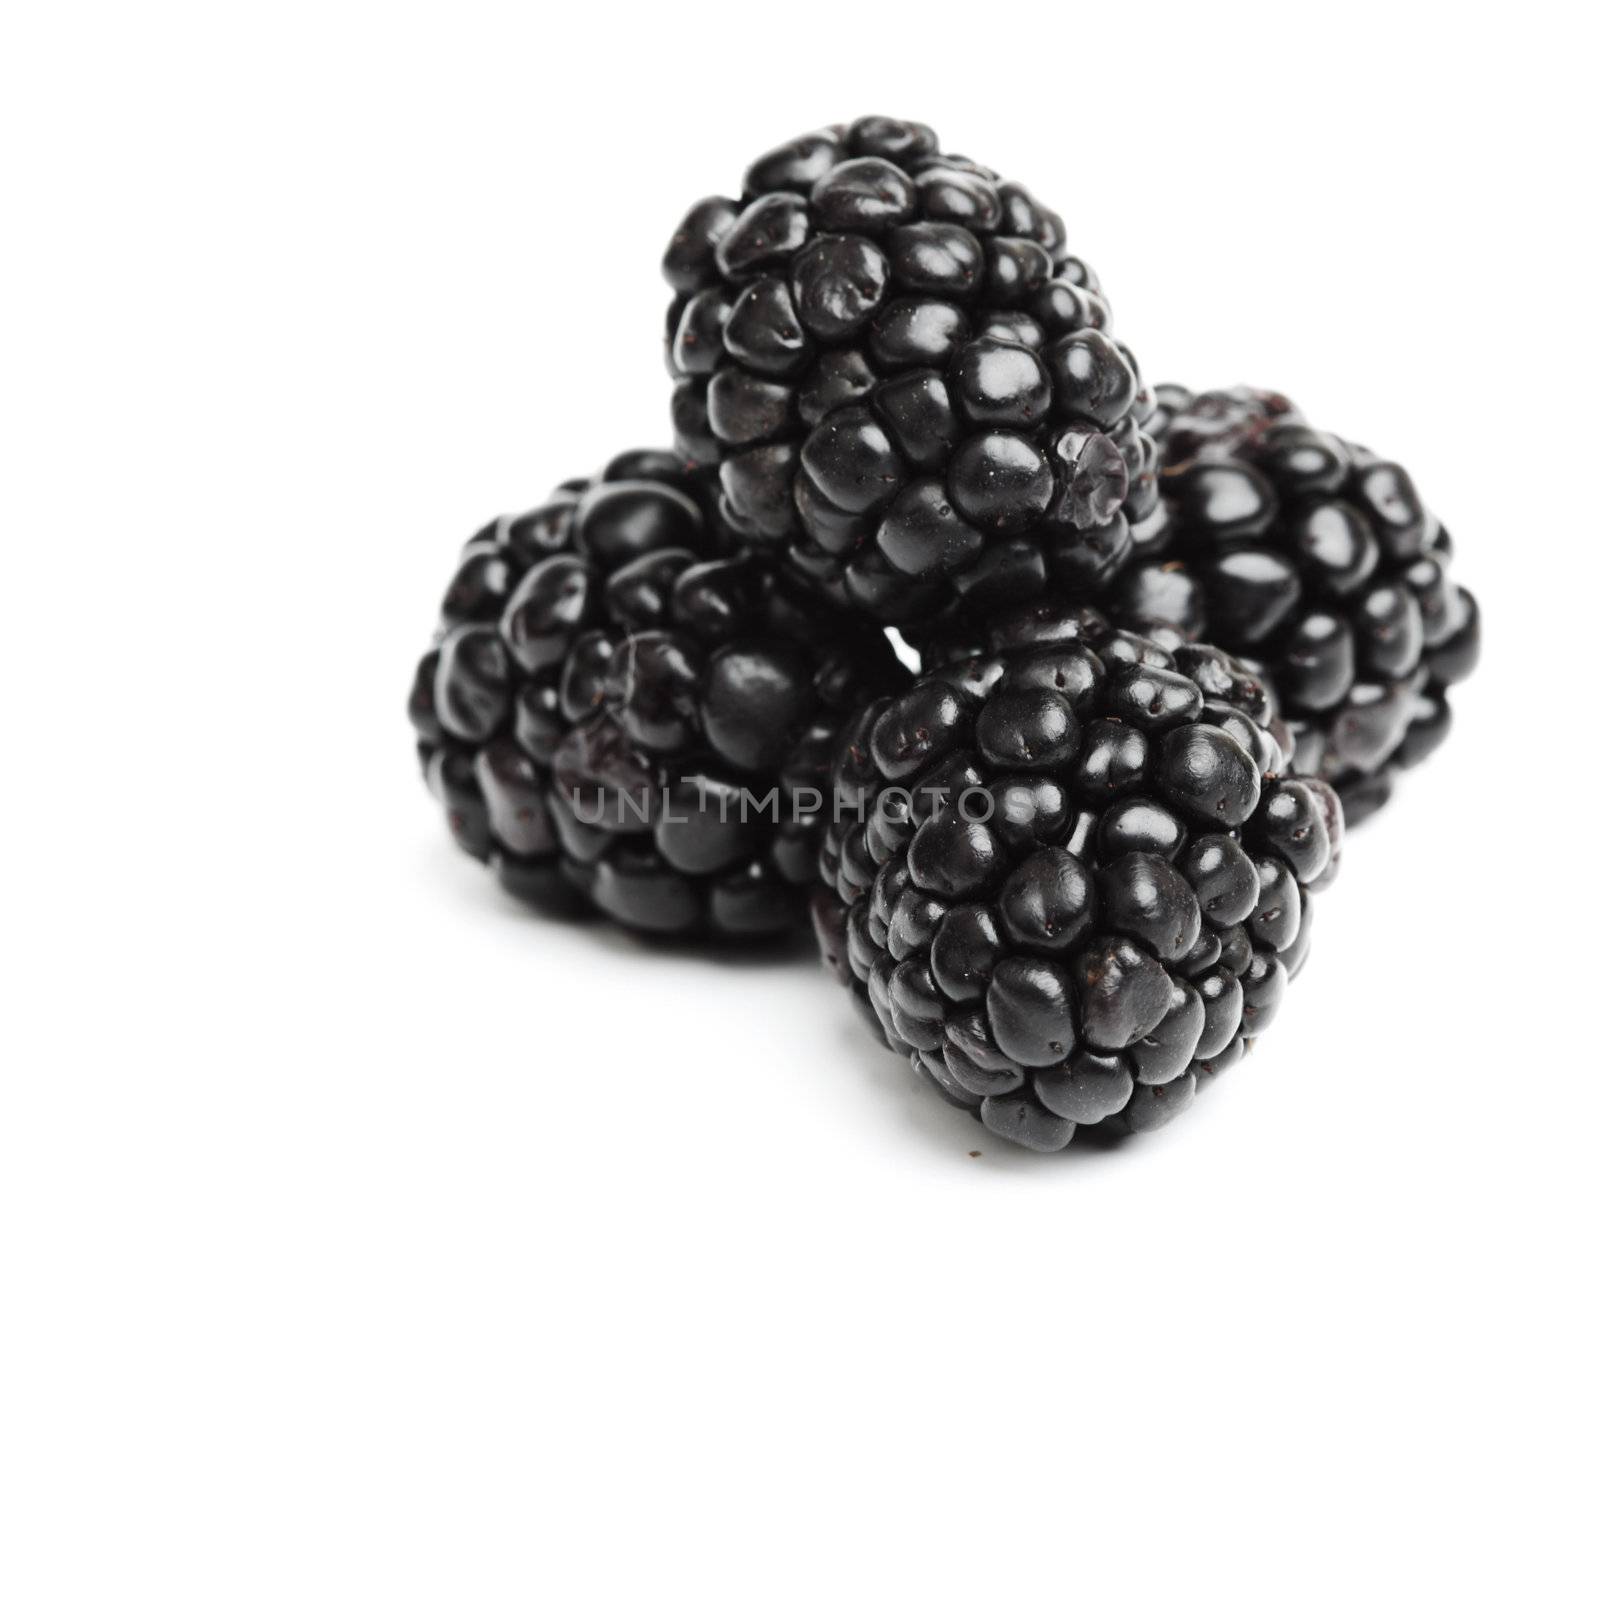 blackberry pile by Yellowj